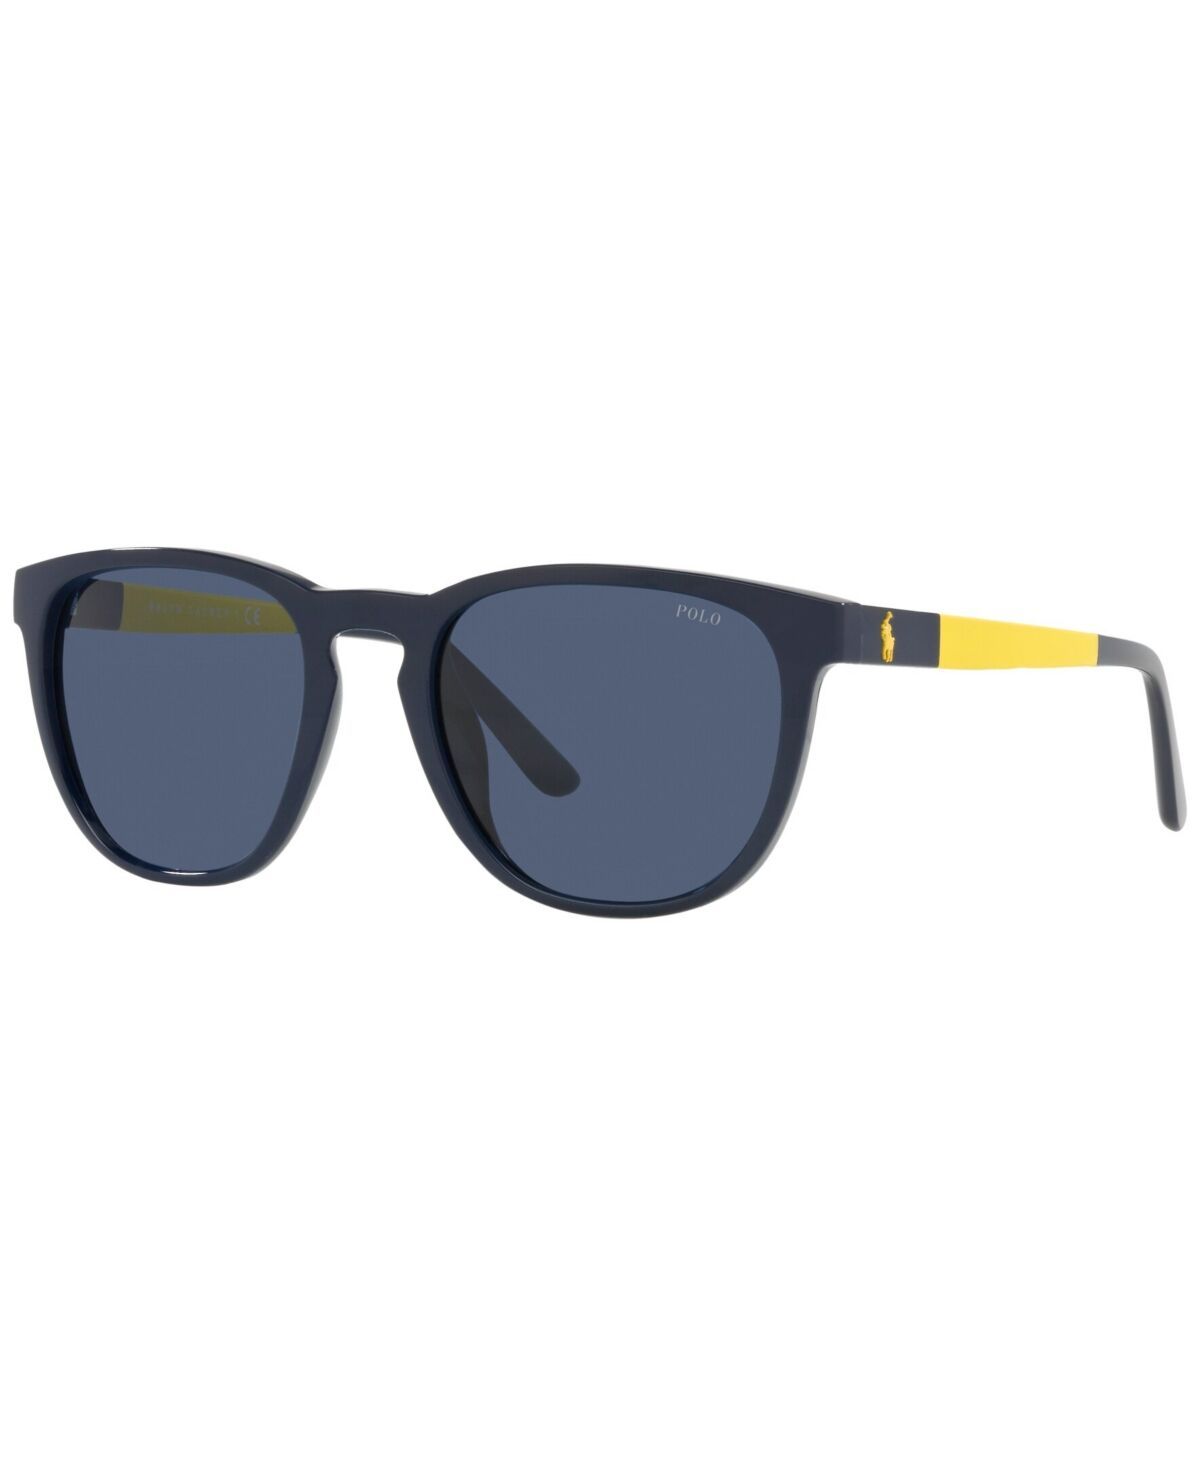 Ralph Lauren Polo Ralph Lauren Men's Sunglasses, PH4182U 53 - Shiny Navy Blue